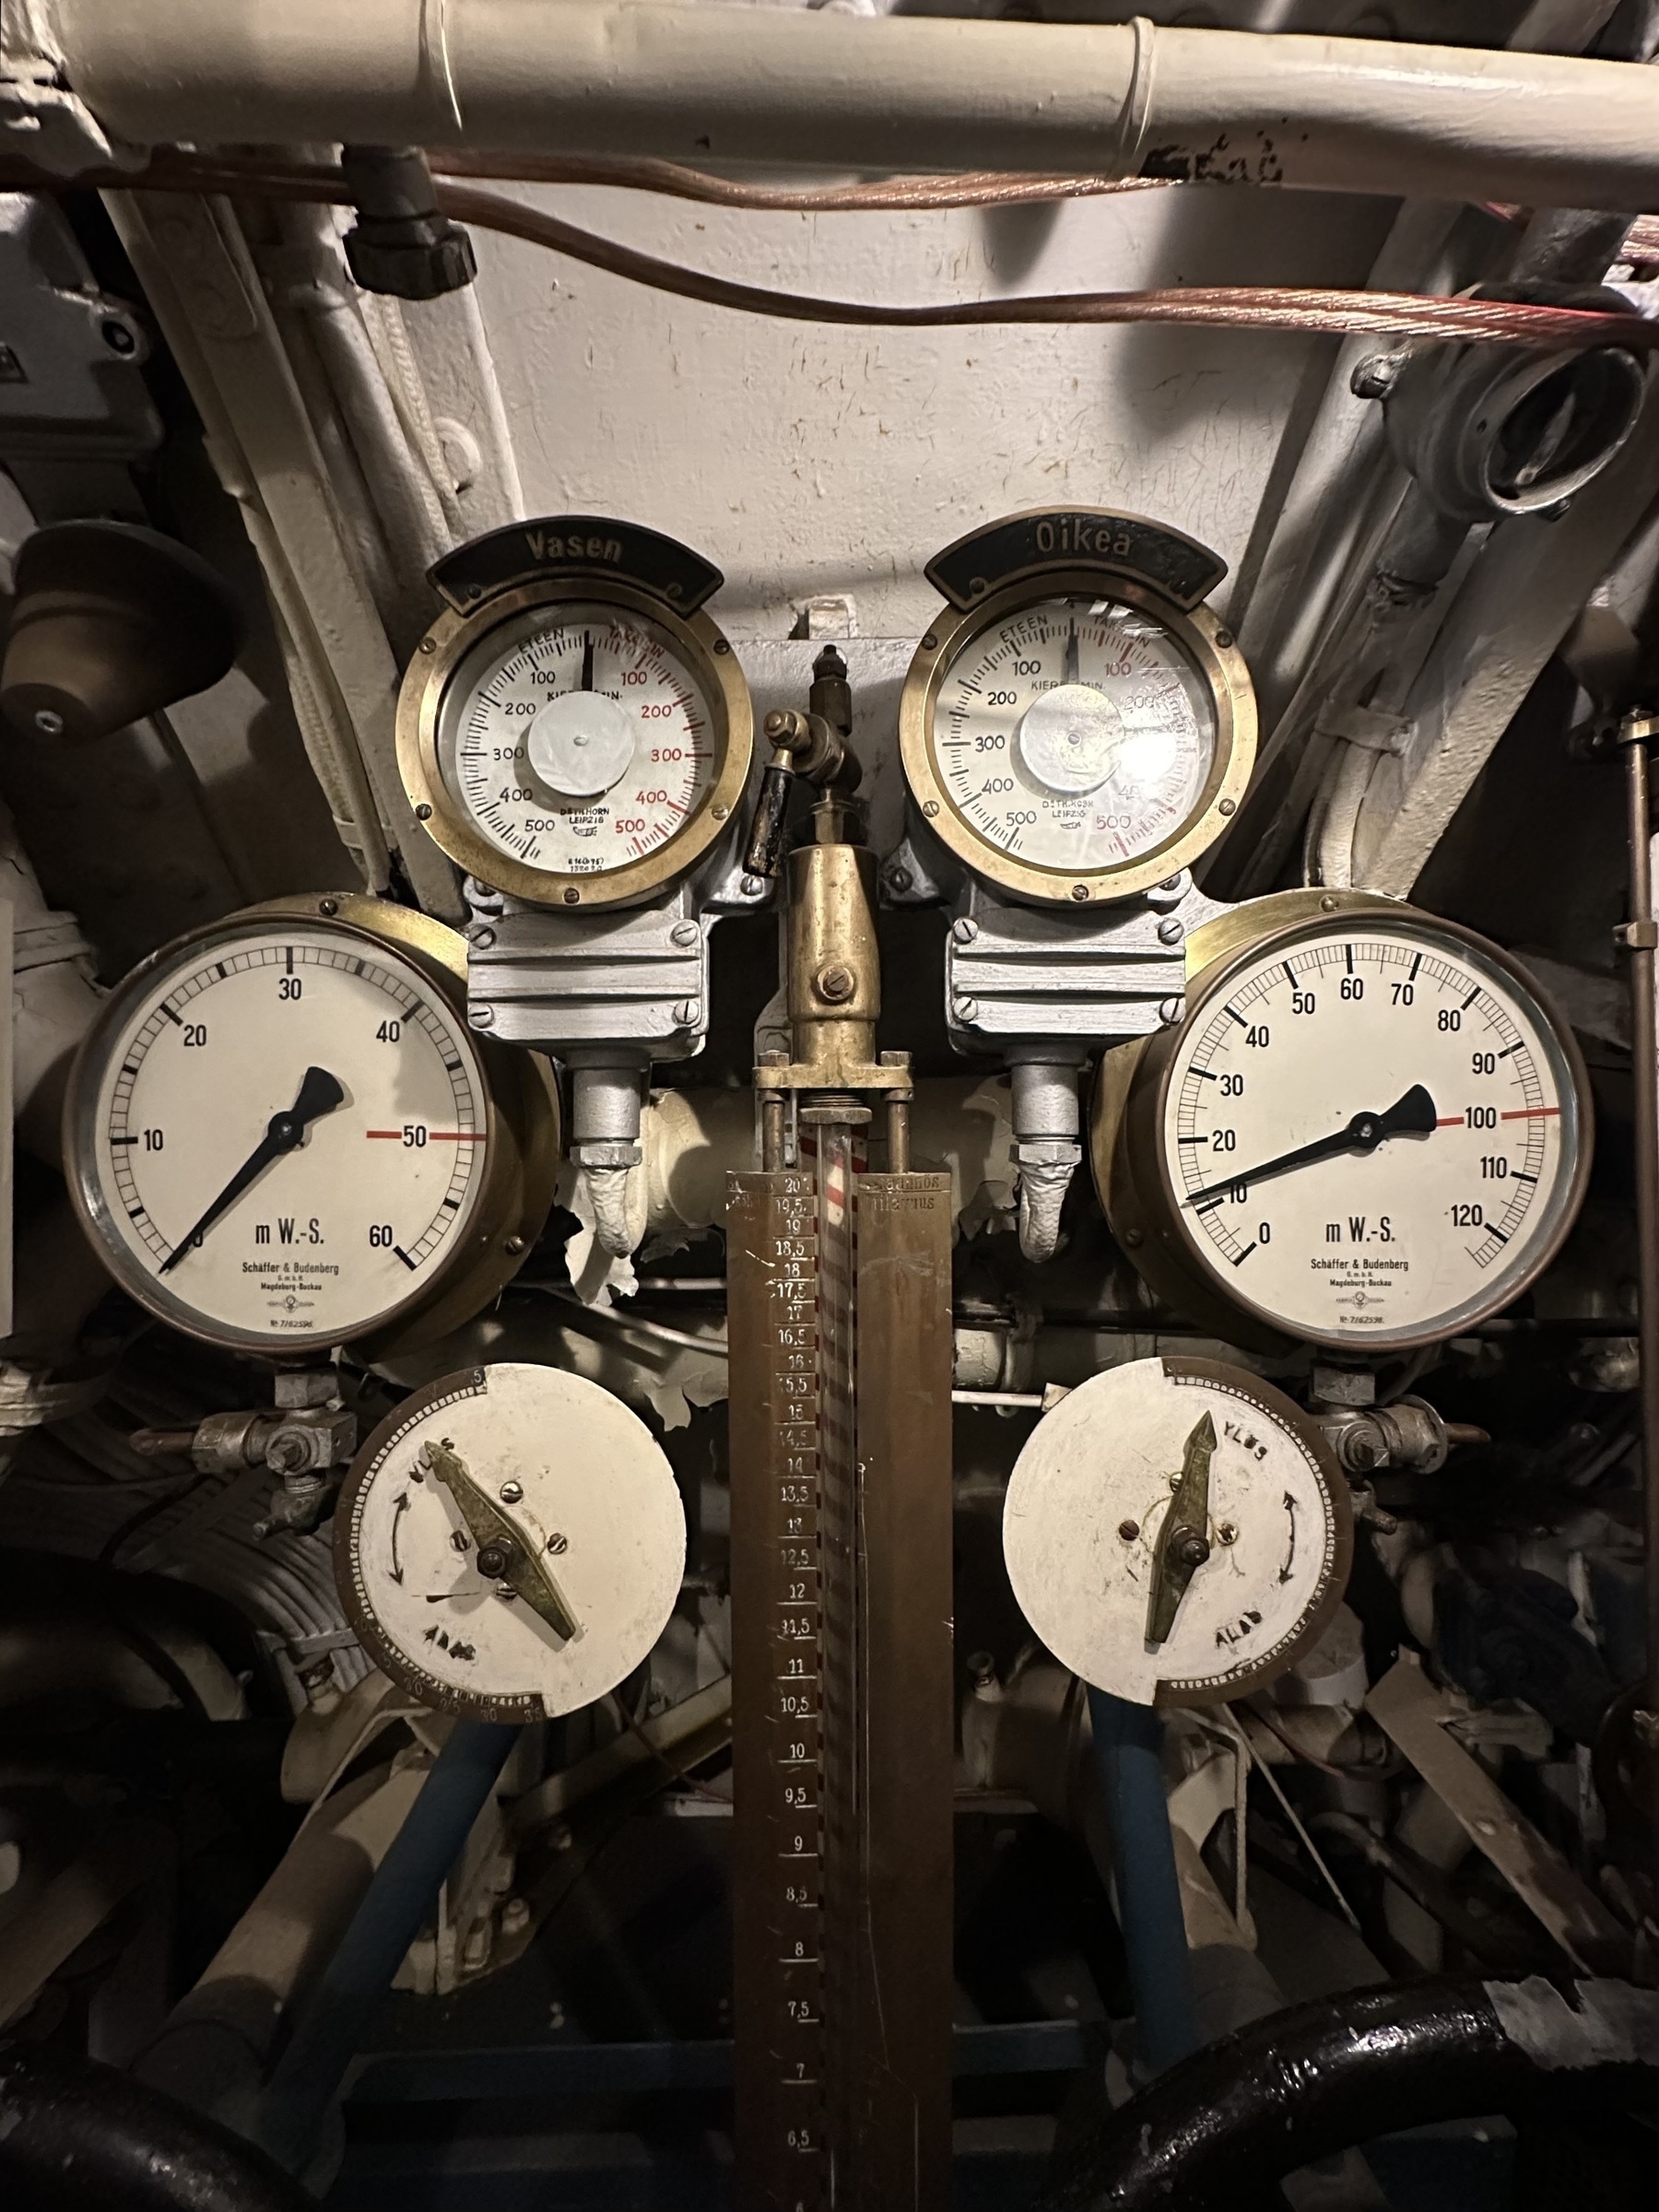 Six analog dials on a Finnish submarine.